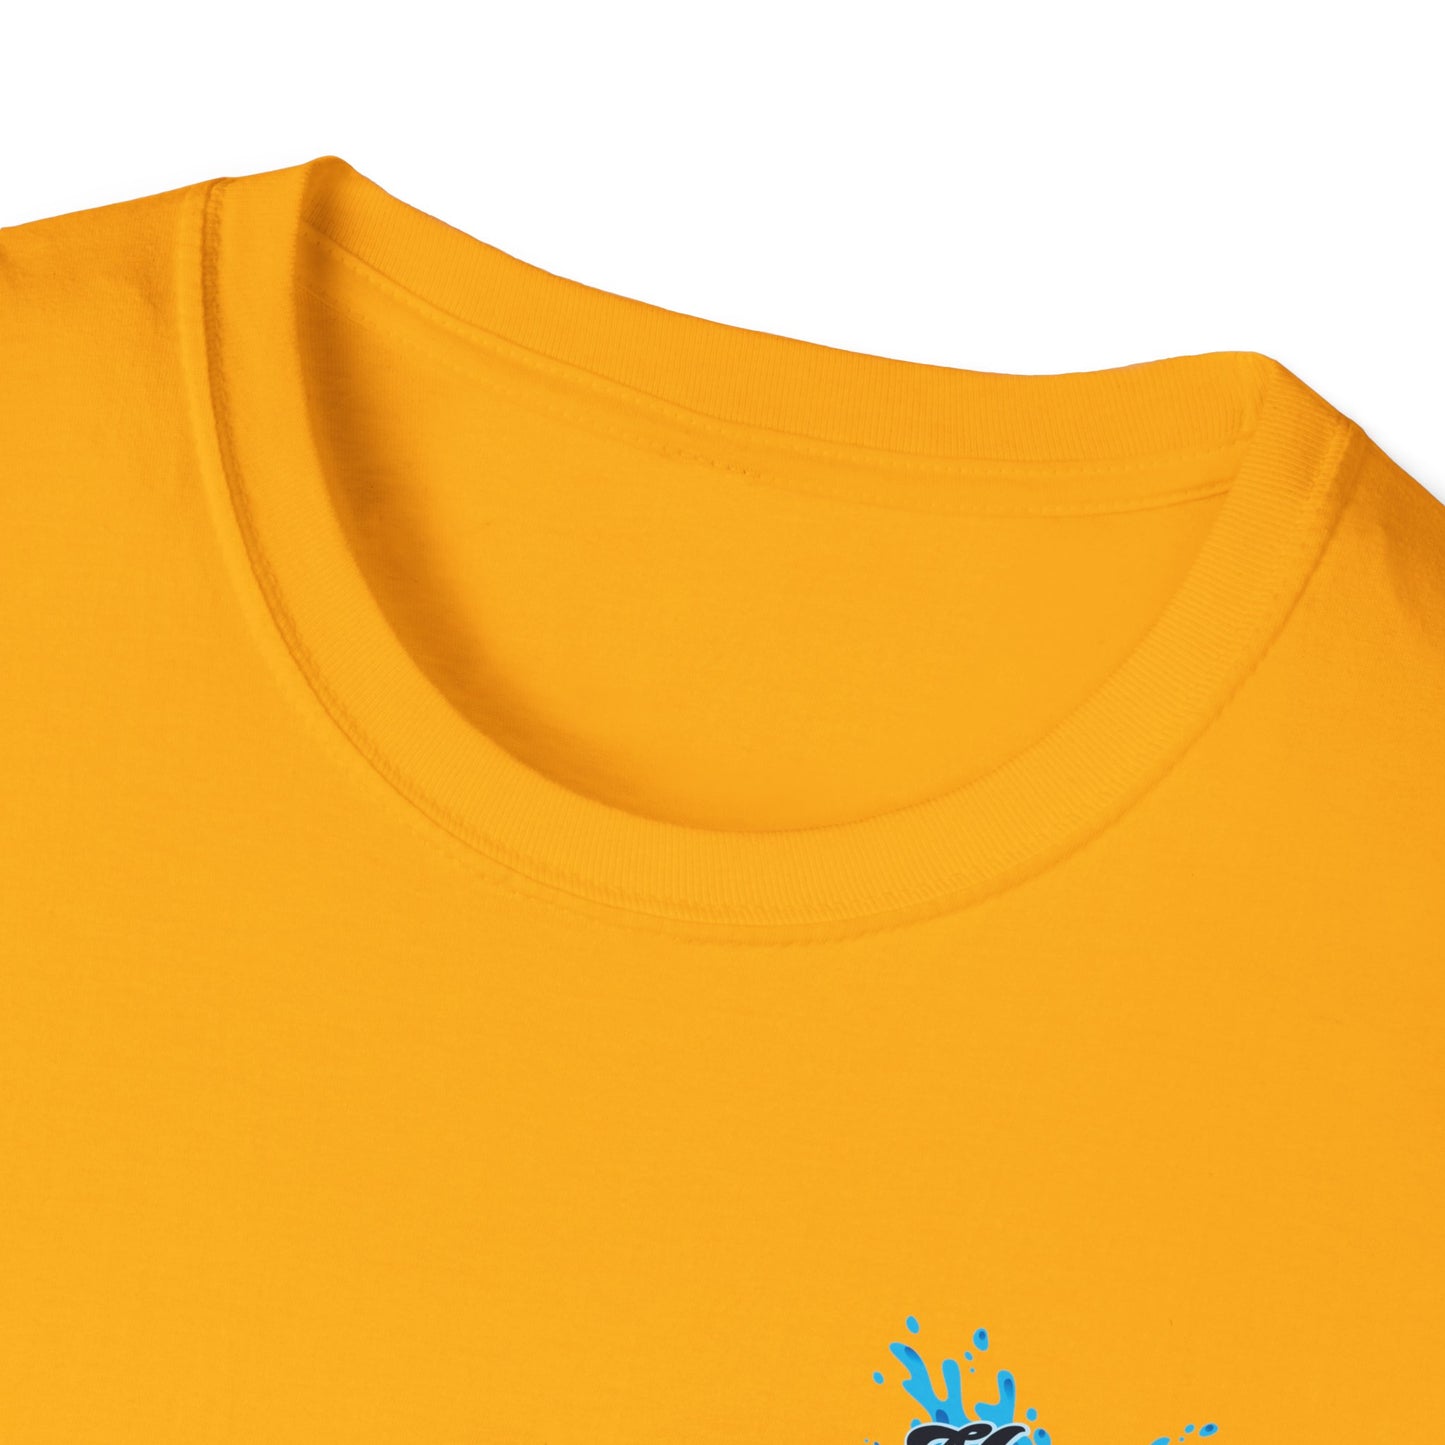 MAIN - TEAM MONTANA  - Unisex Softstyle T-Shirt